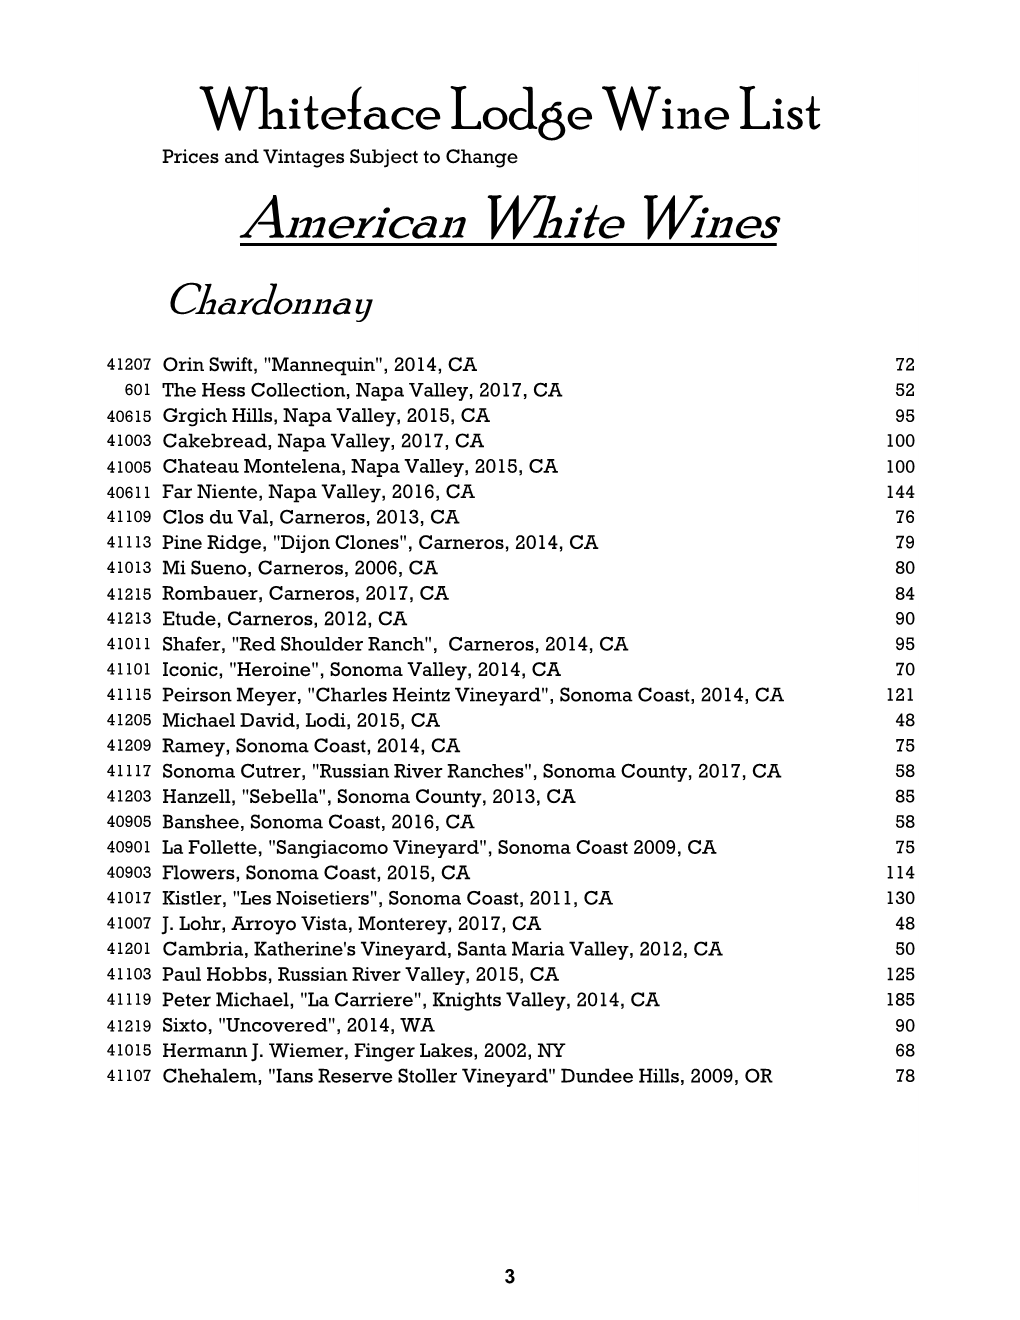 American White Wines Chardonnay